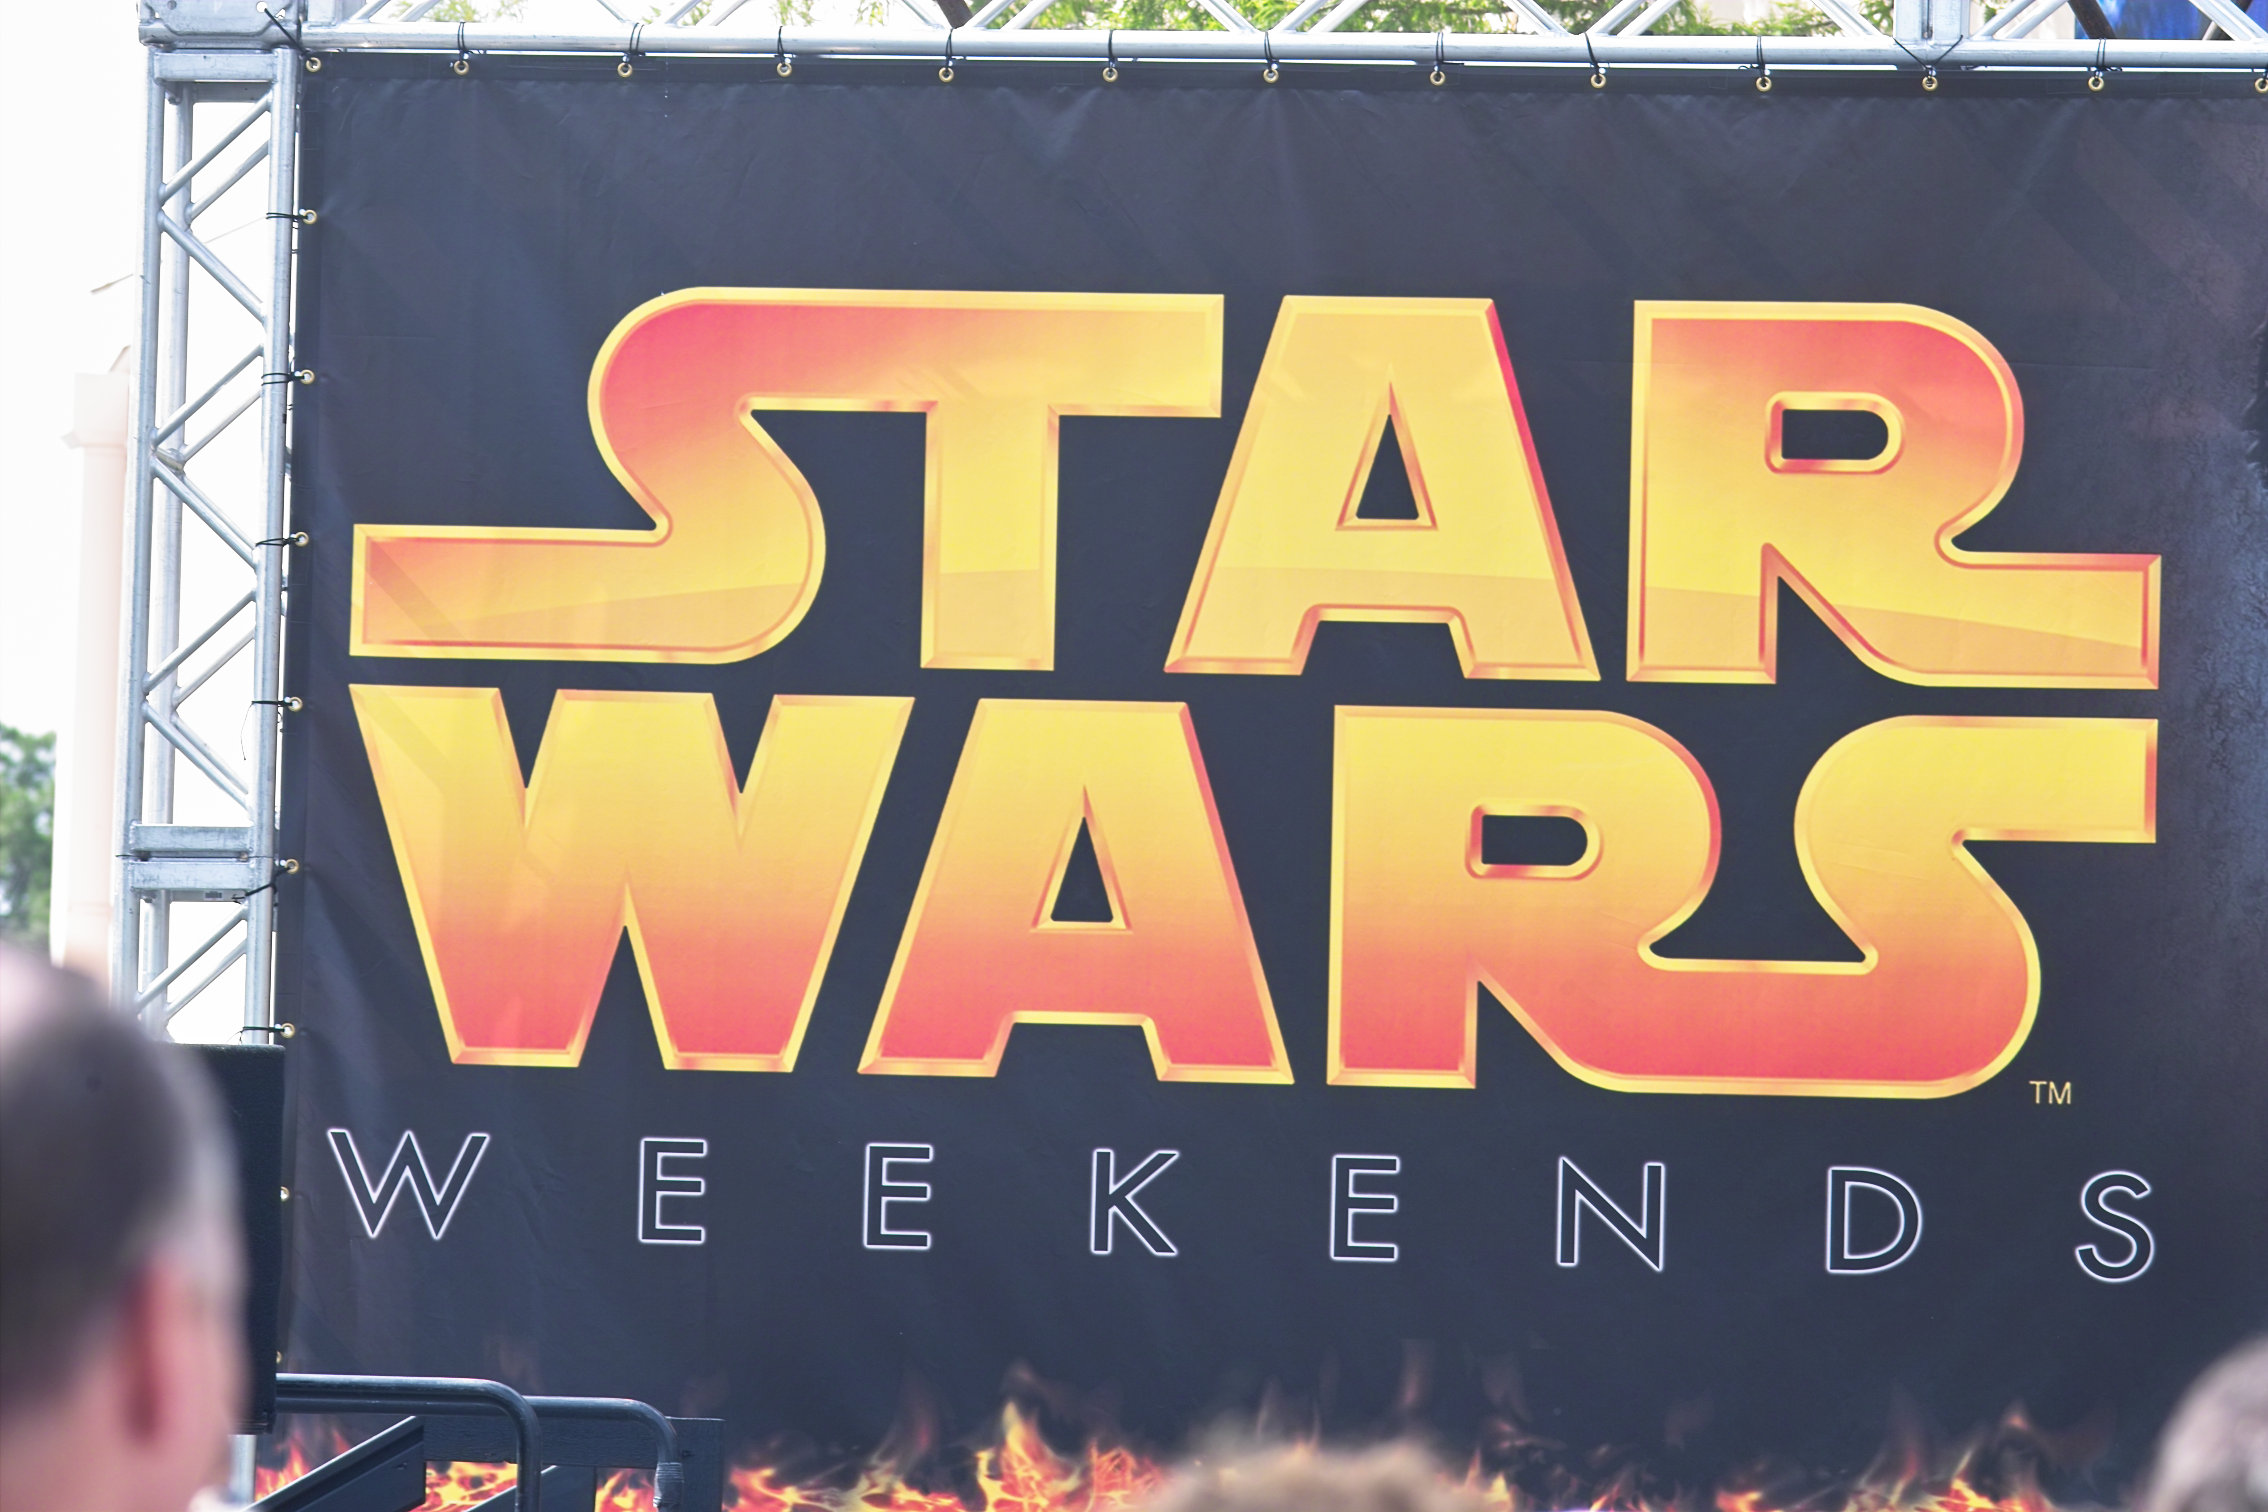 Star Wars weekend sign